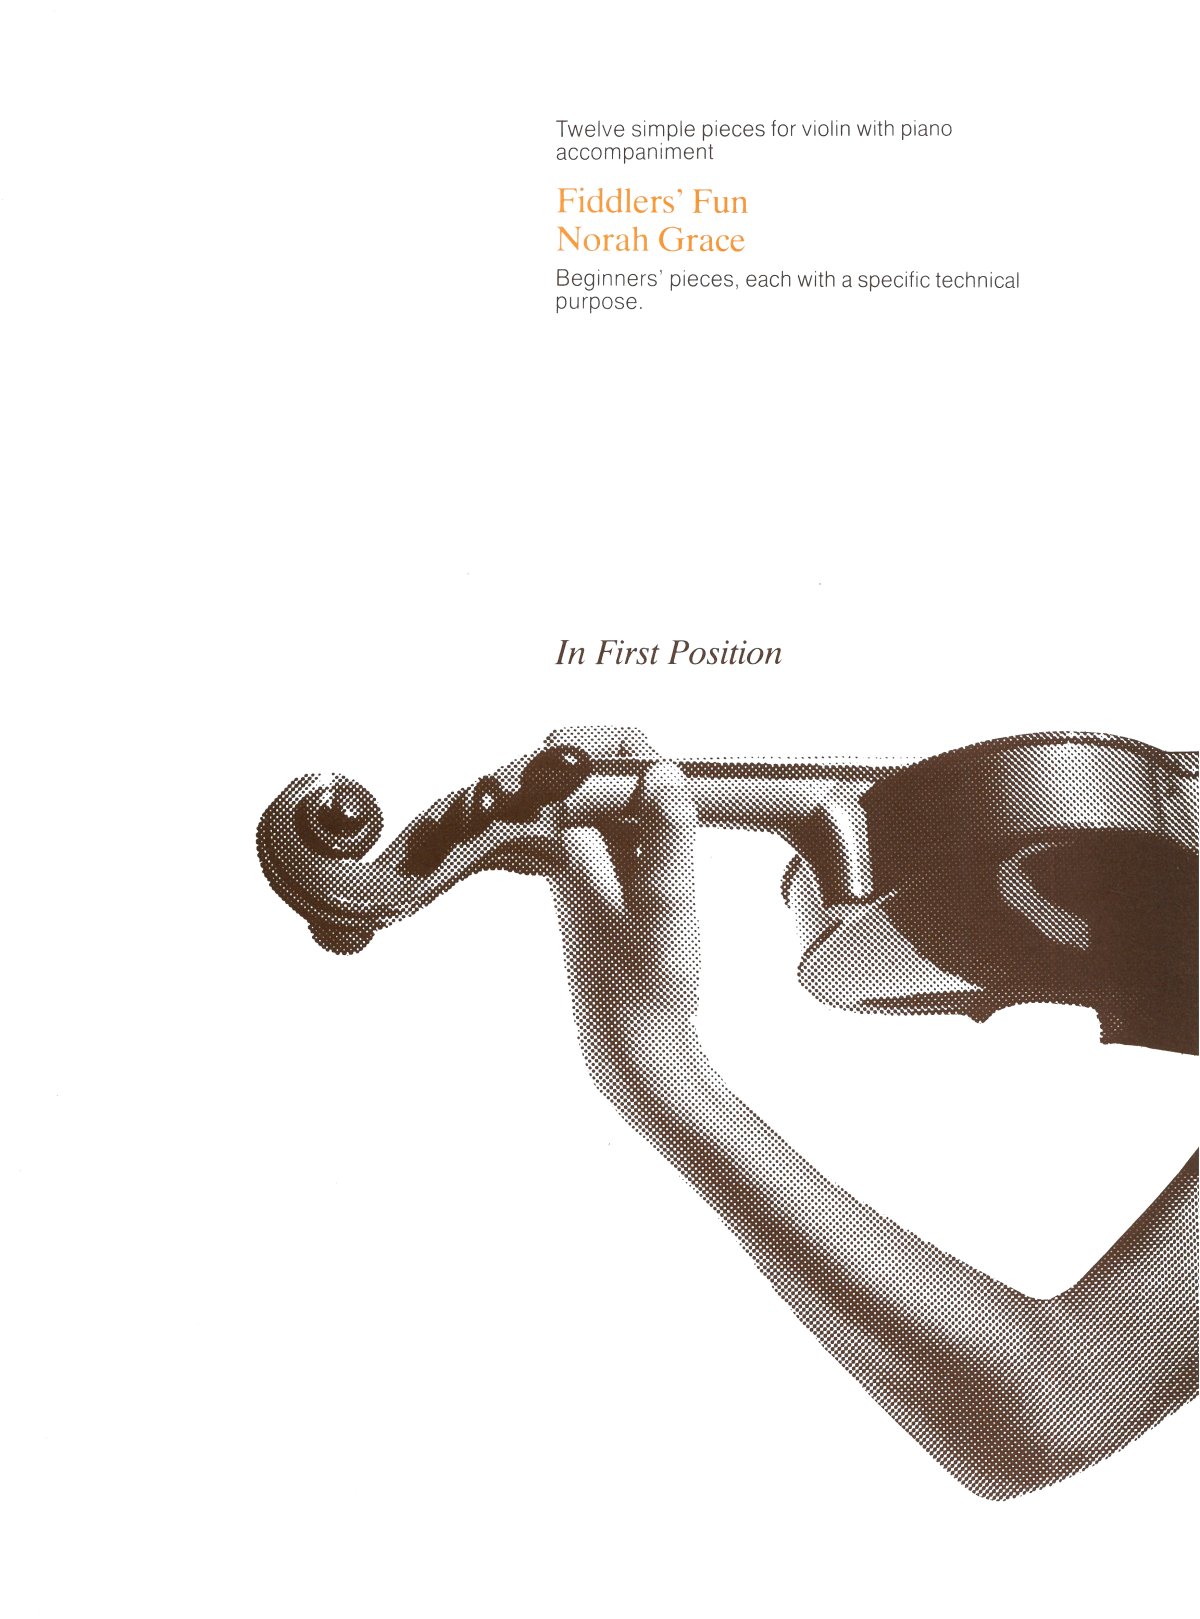 Grace Fiddlers Fun Violin & Piano Sheet Music Songbook